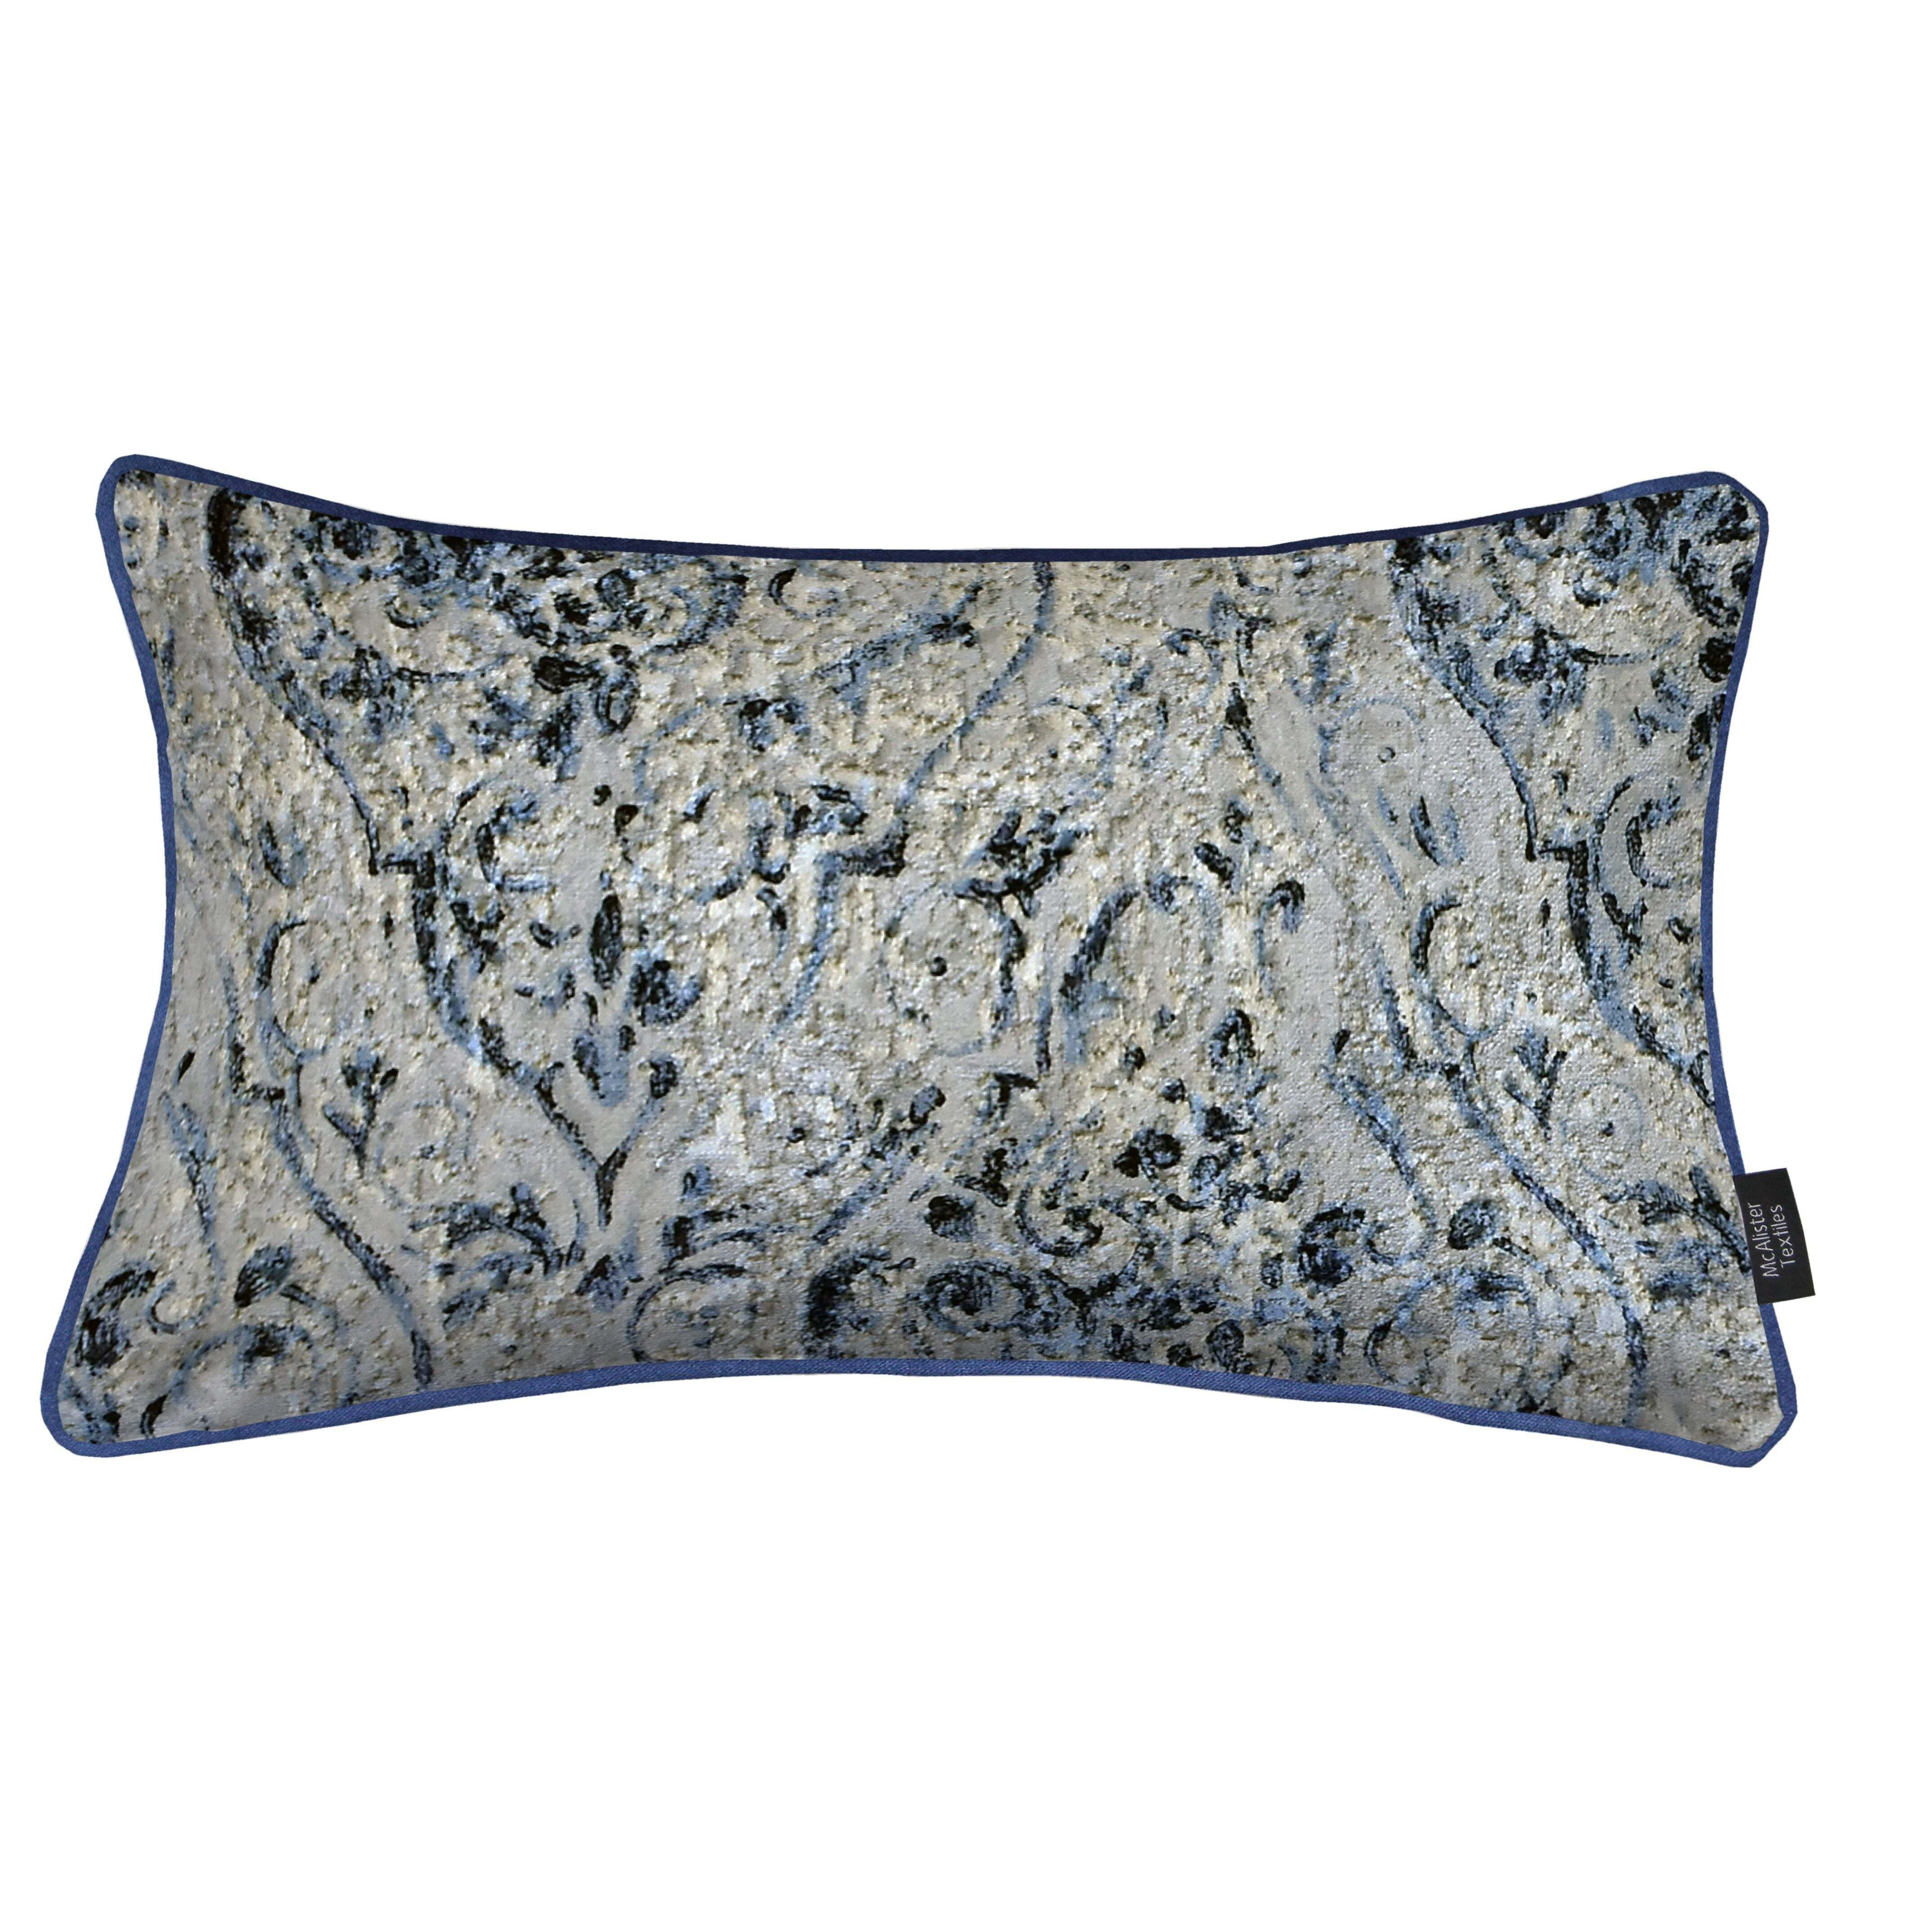 Renaissance Navy Blue Printed Velvet Cushions, Cover Only / 60cm x 40cm